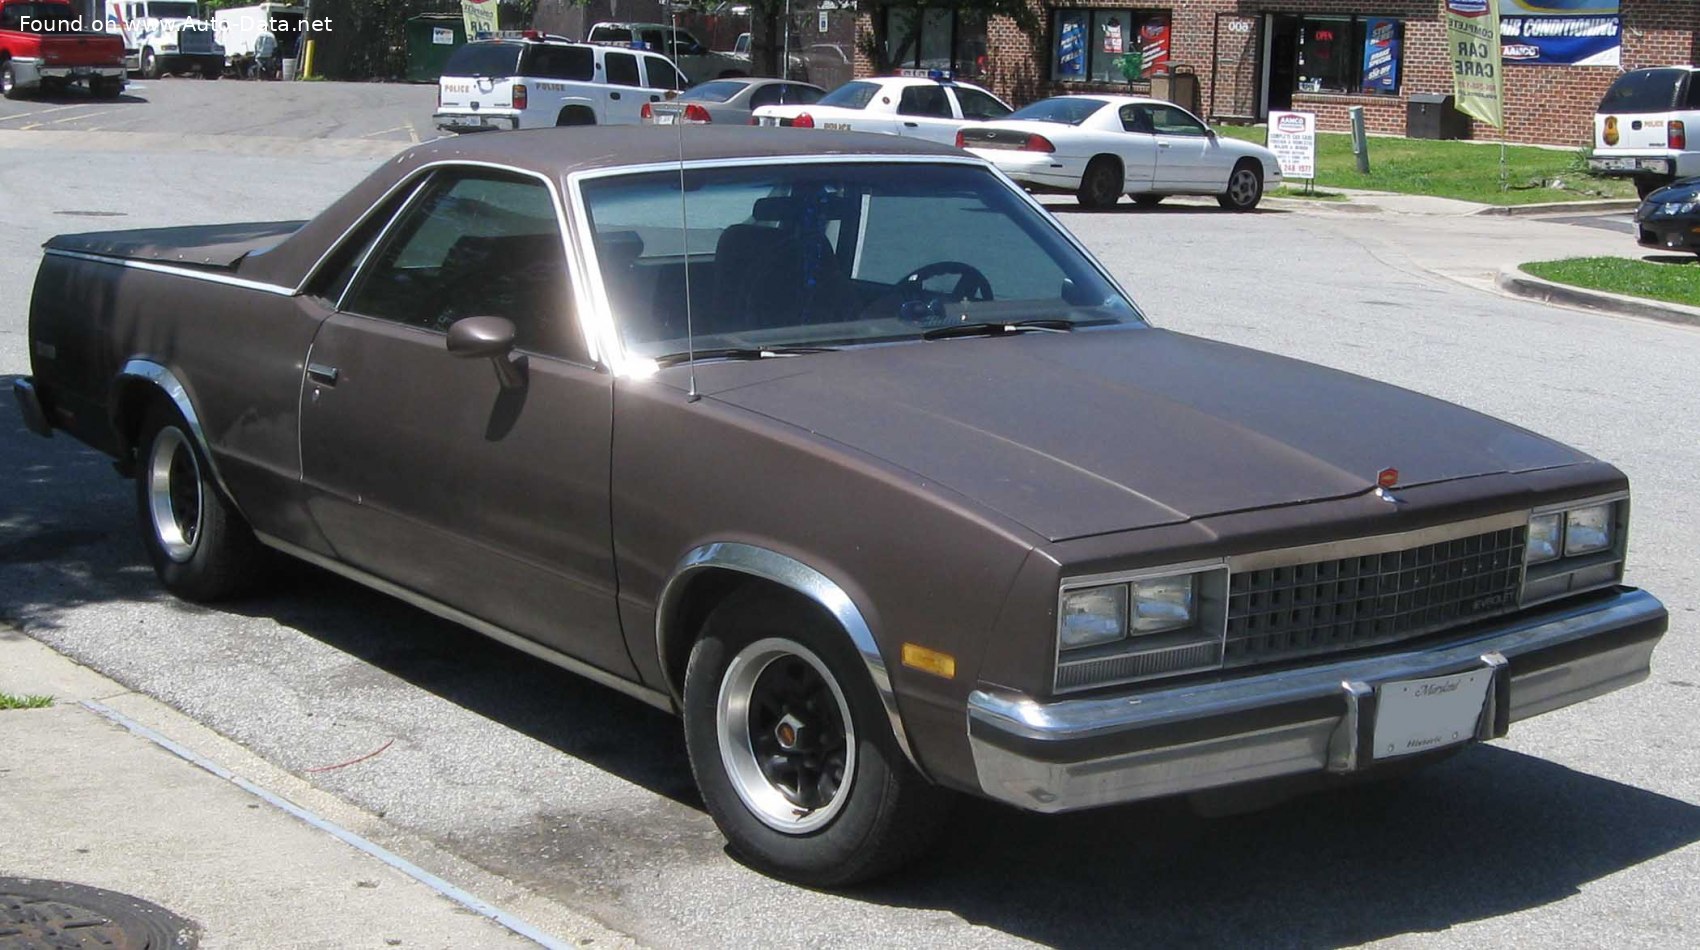 https://www.auto-data.net/images/f108/Chevrolet-Malibu-El-Camino-Sedan-Pickup-facelift-1981.jpg